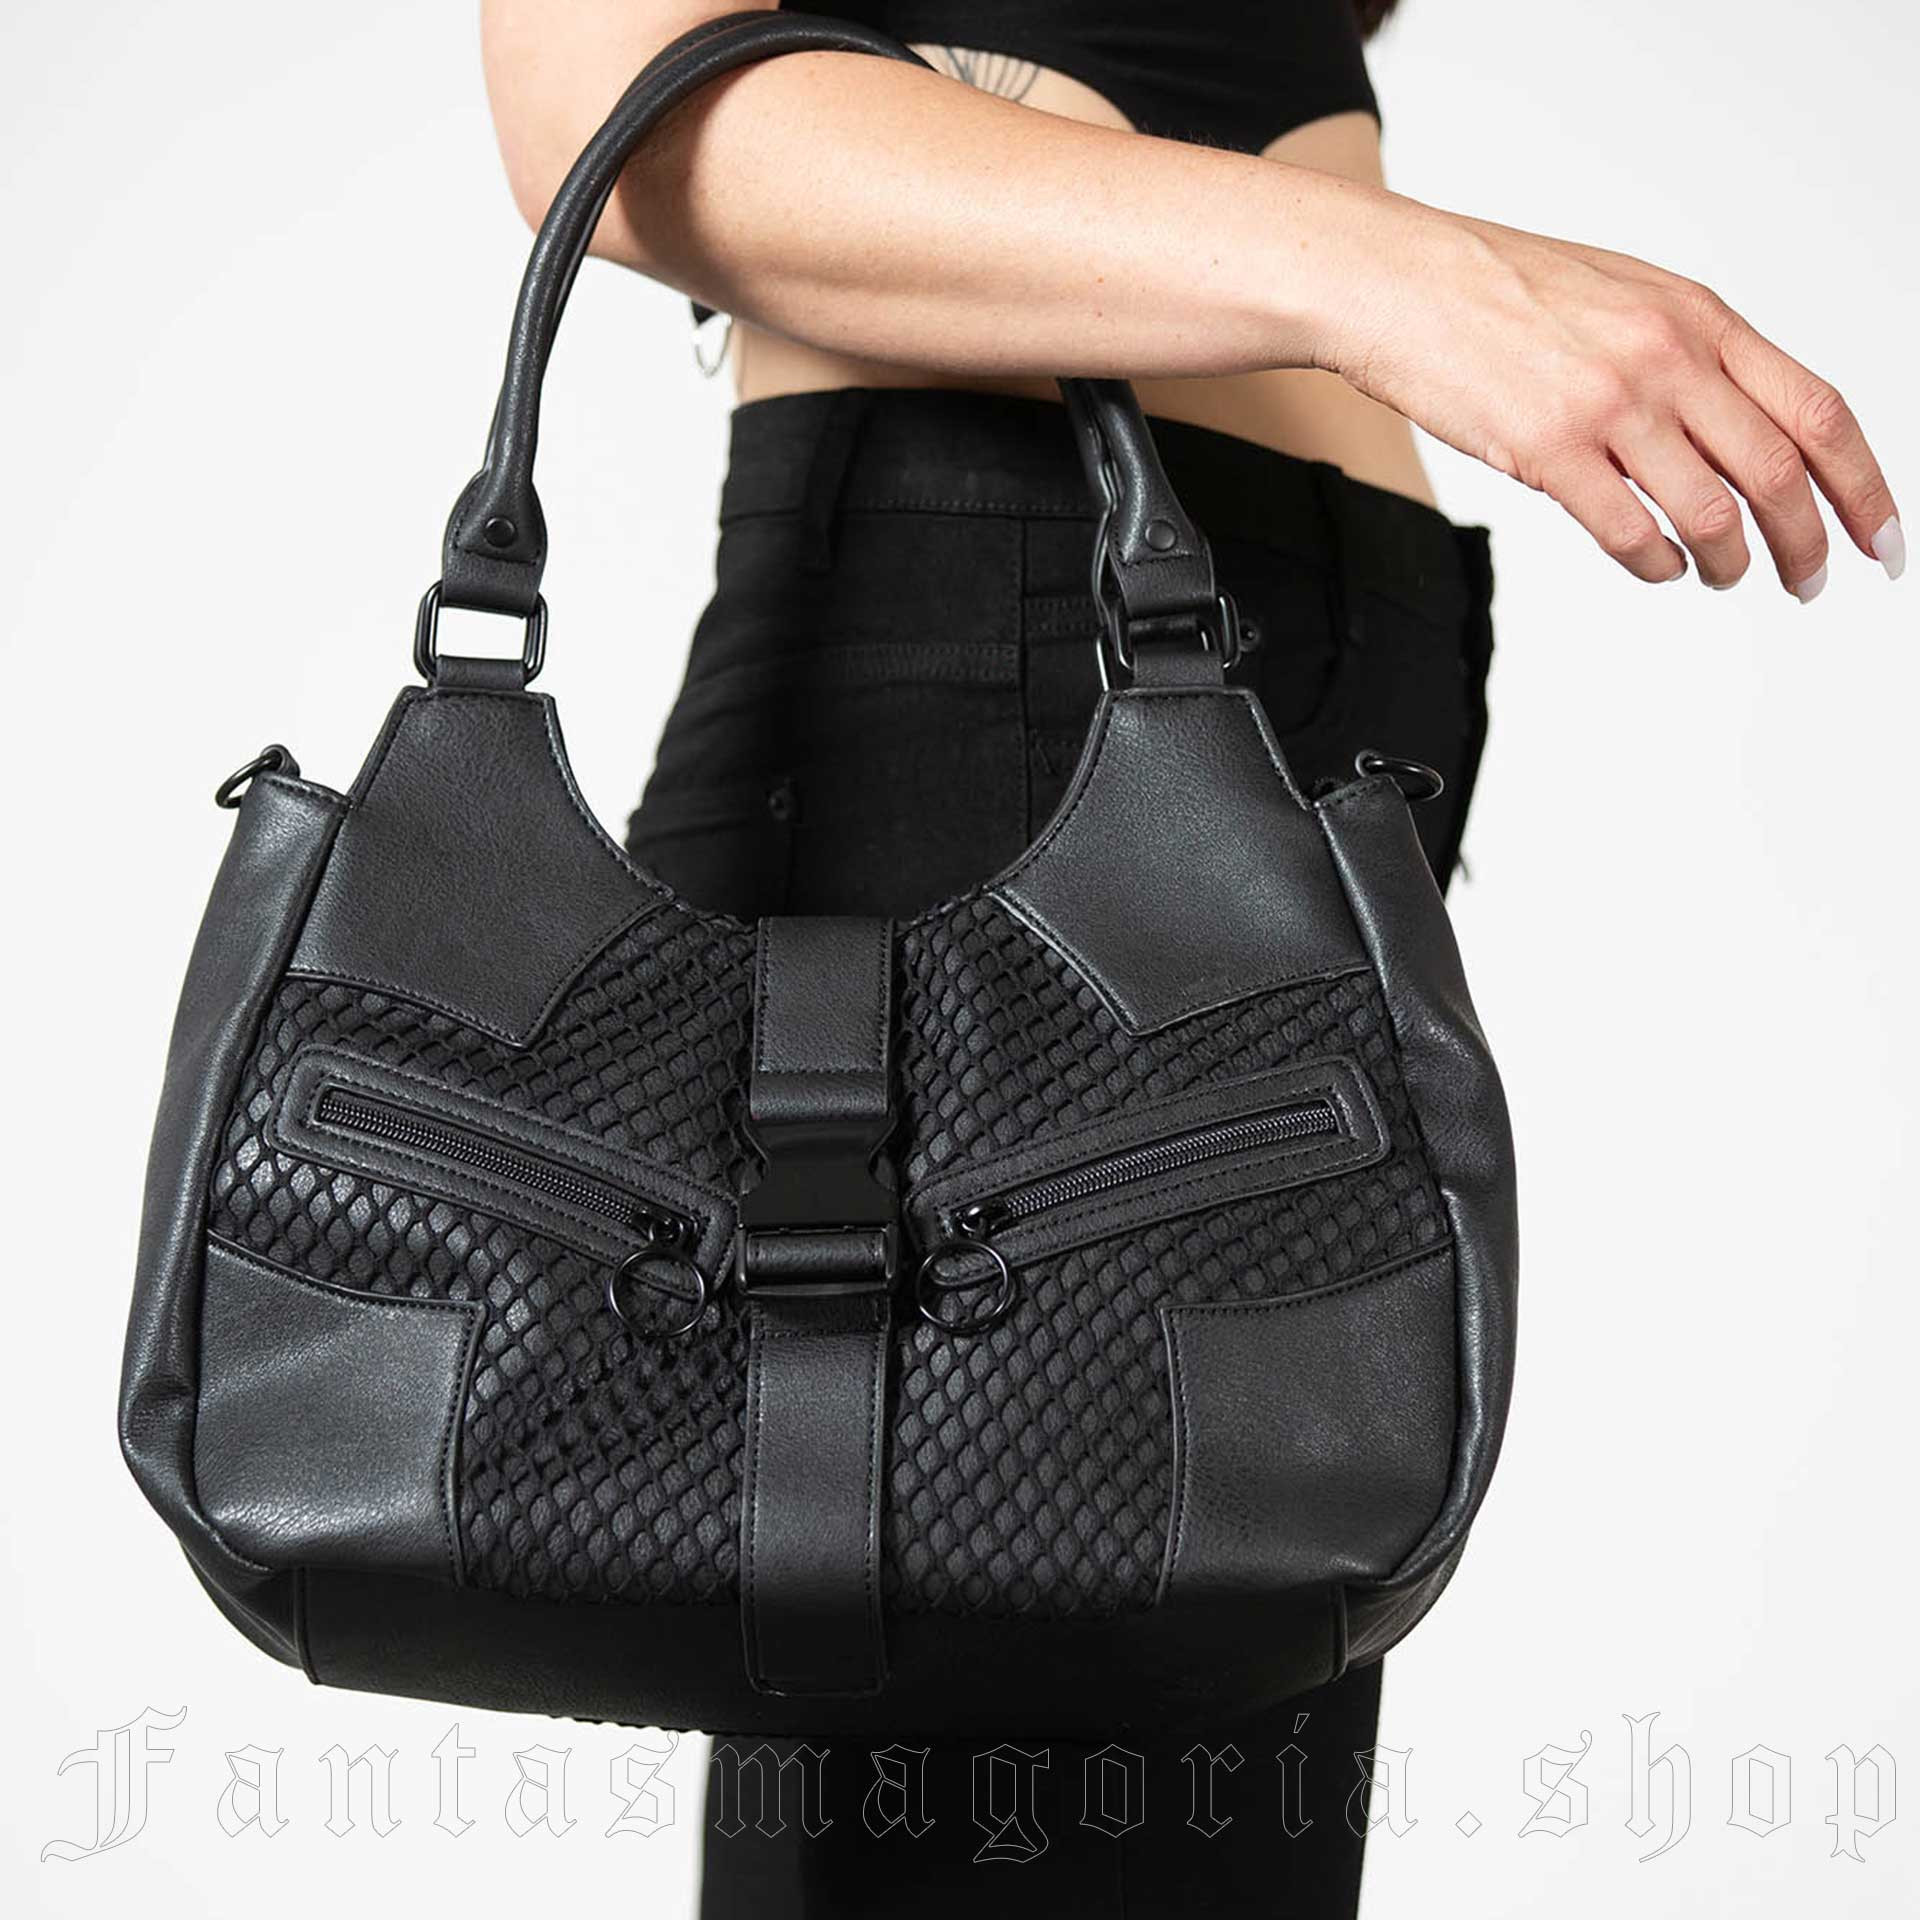 Designer Handbags Tumbler Designs for FREE in Silhouette Studio - YouTube